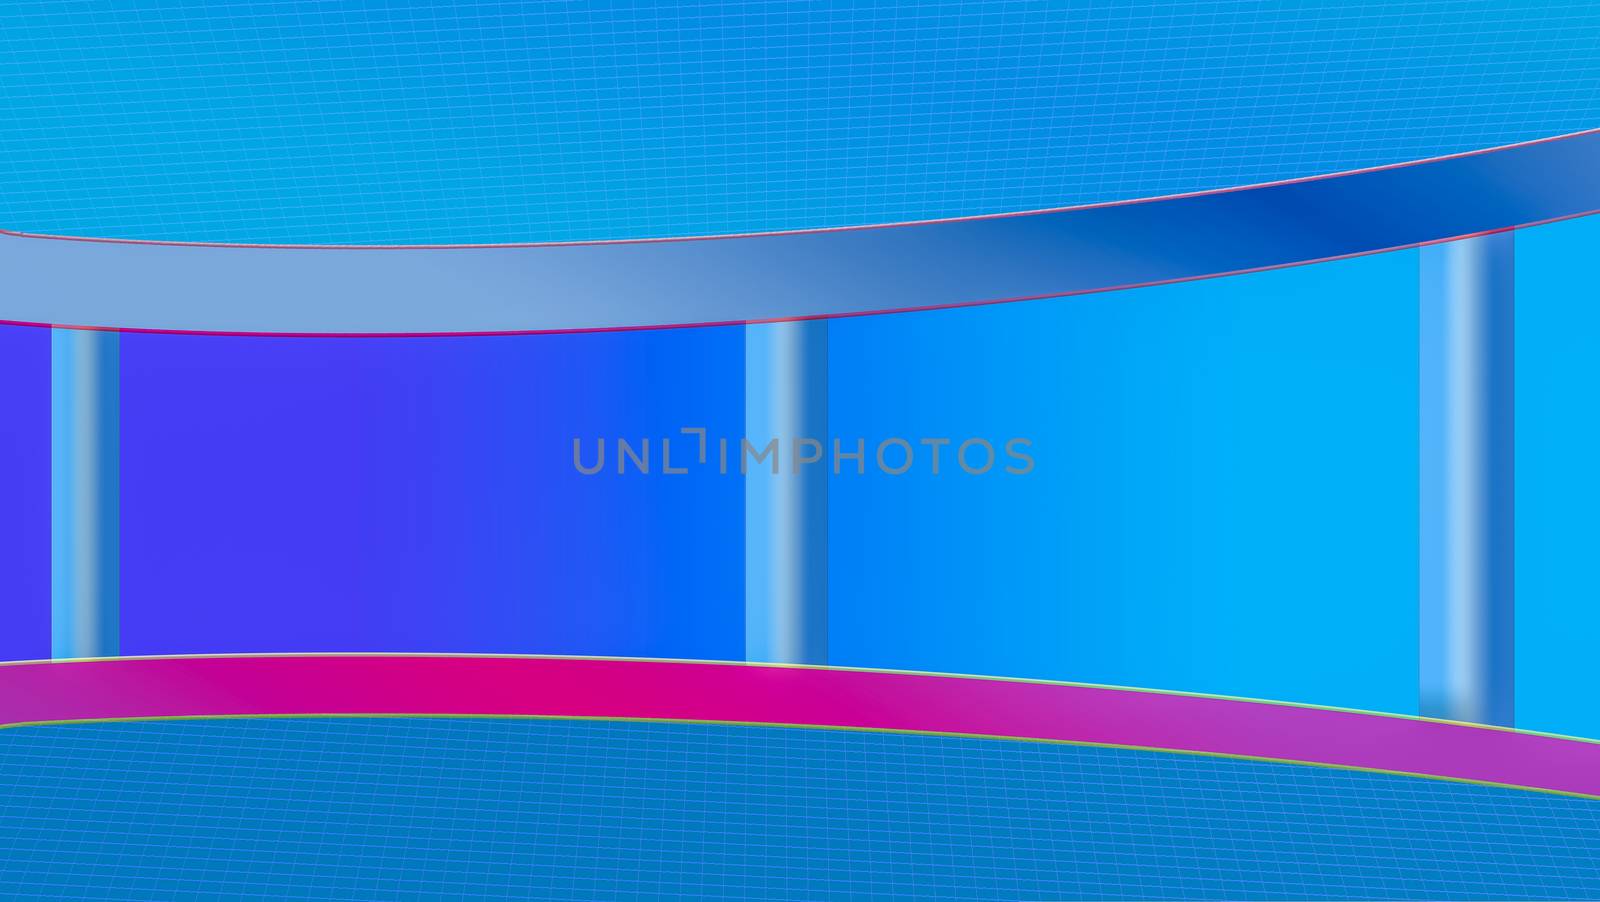 Virtual TV news broadcast studio set background by imagesbykenny